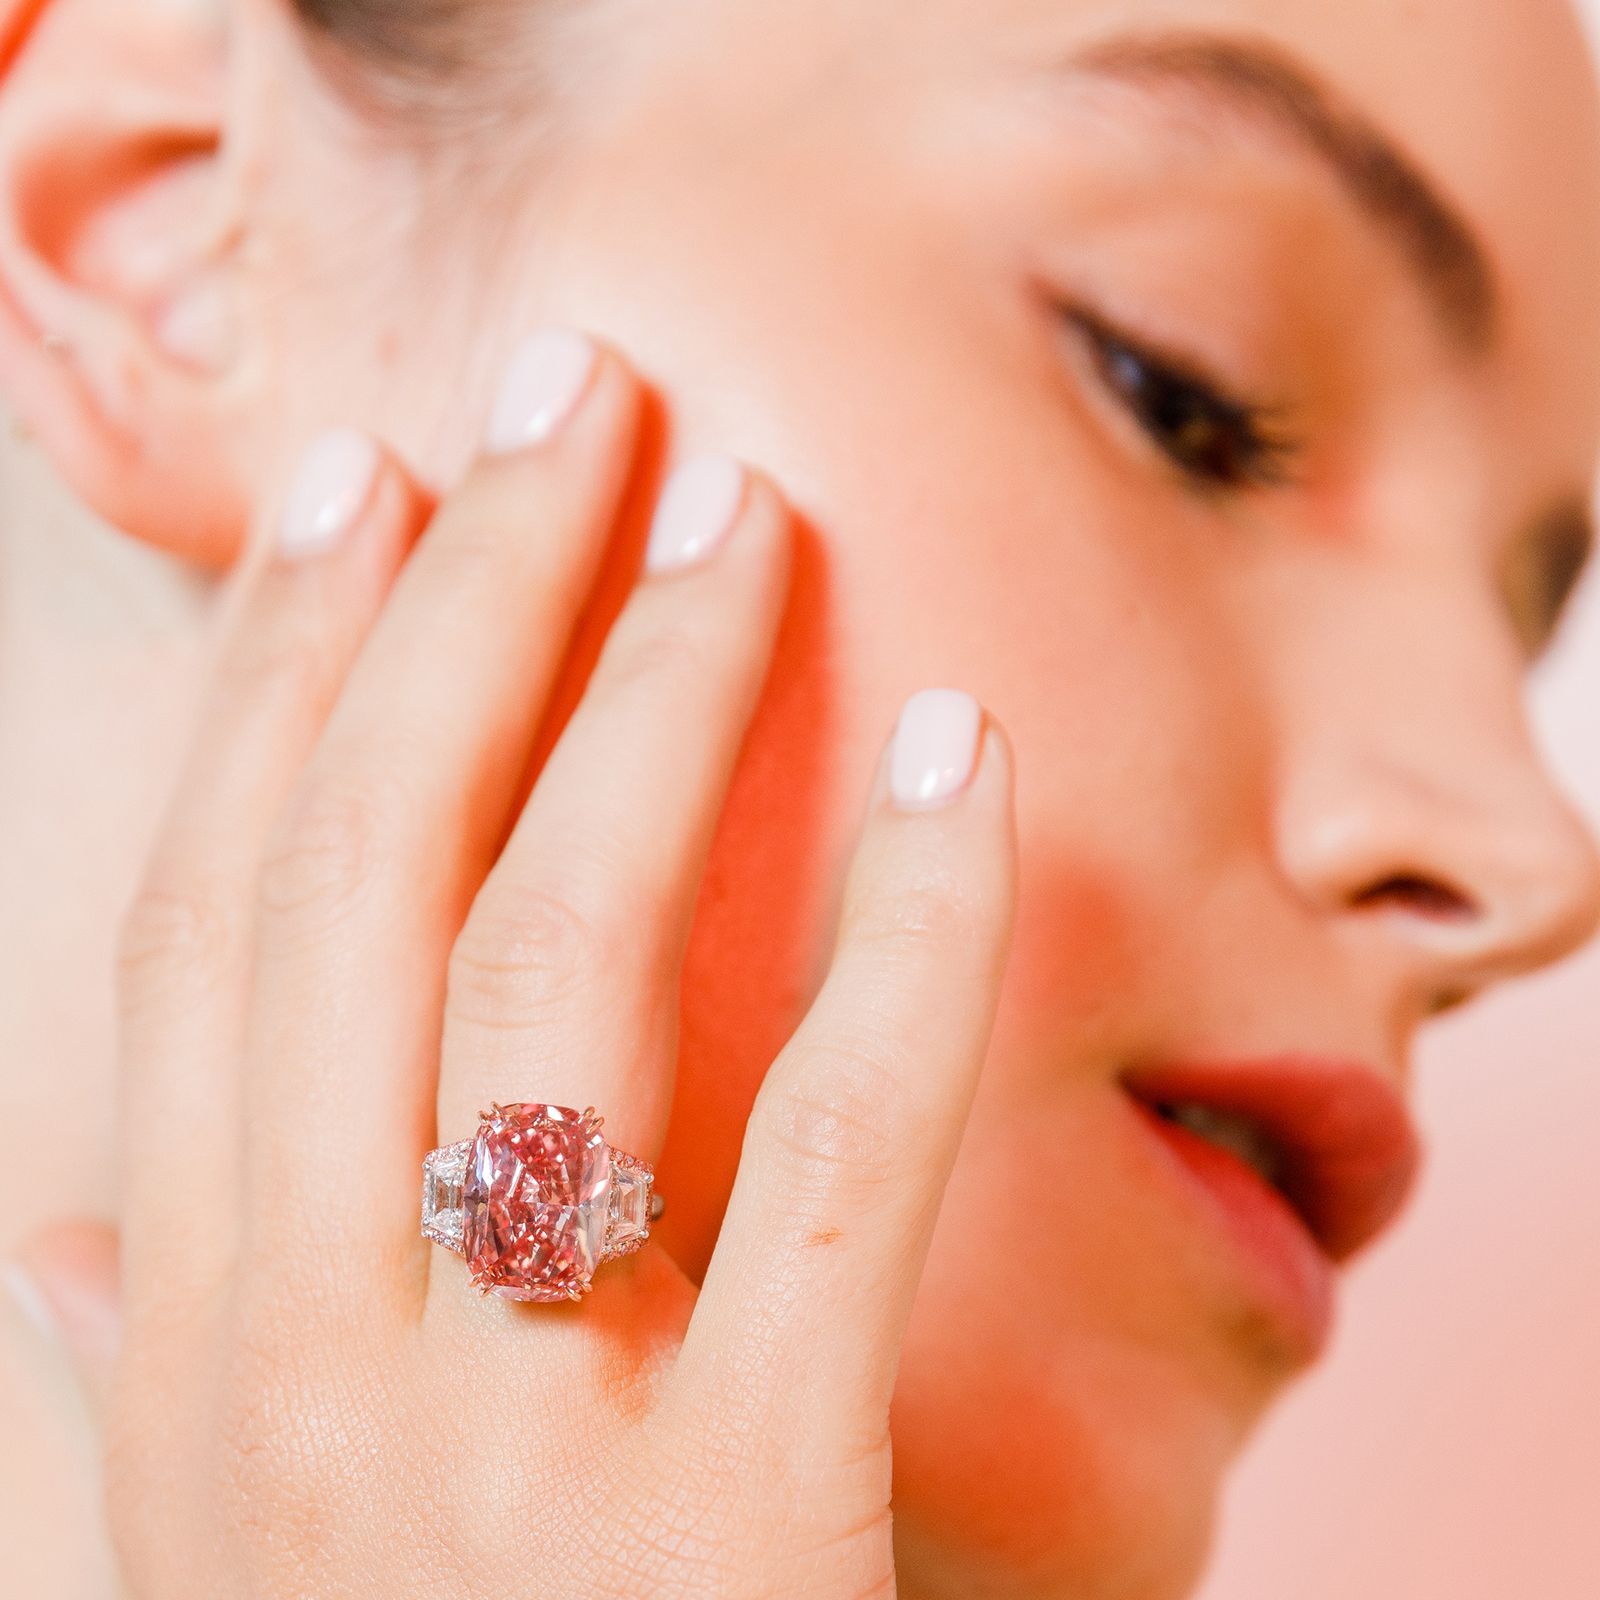 Model wearing the Williamson Pink Star diamond, an 11.15-carat cushion-cut internally flawless fancy vivid pink diamond